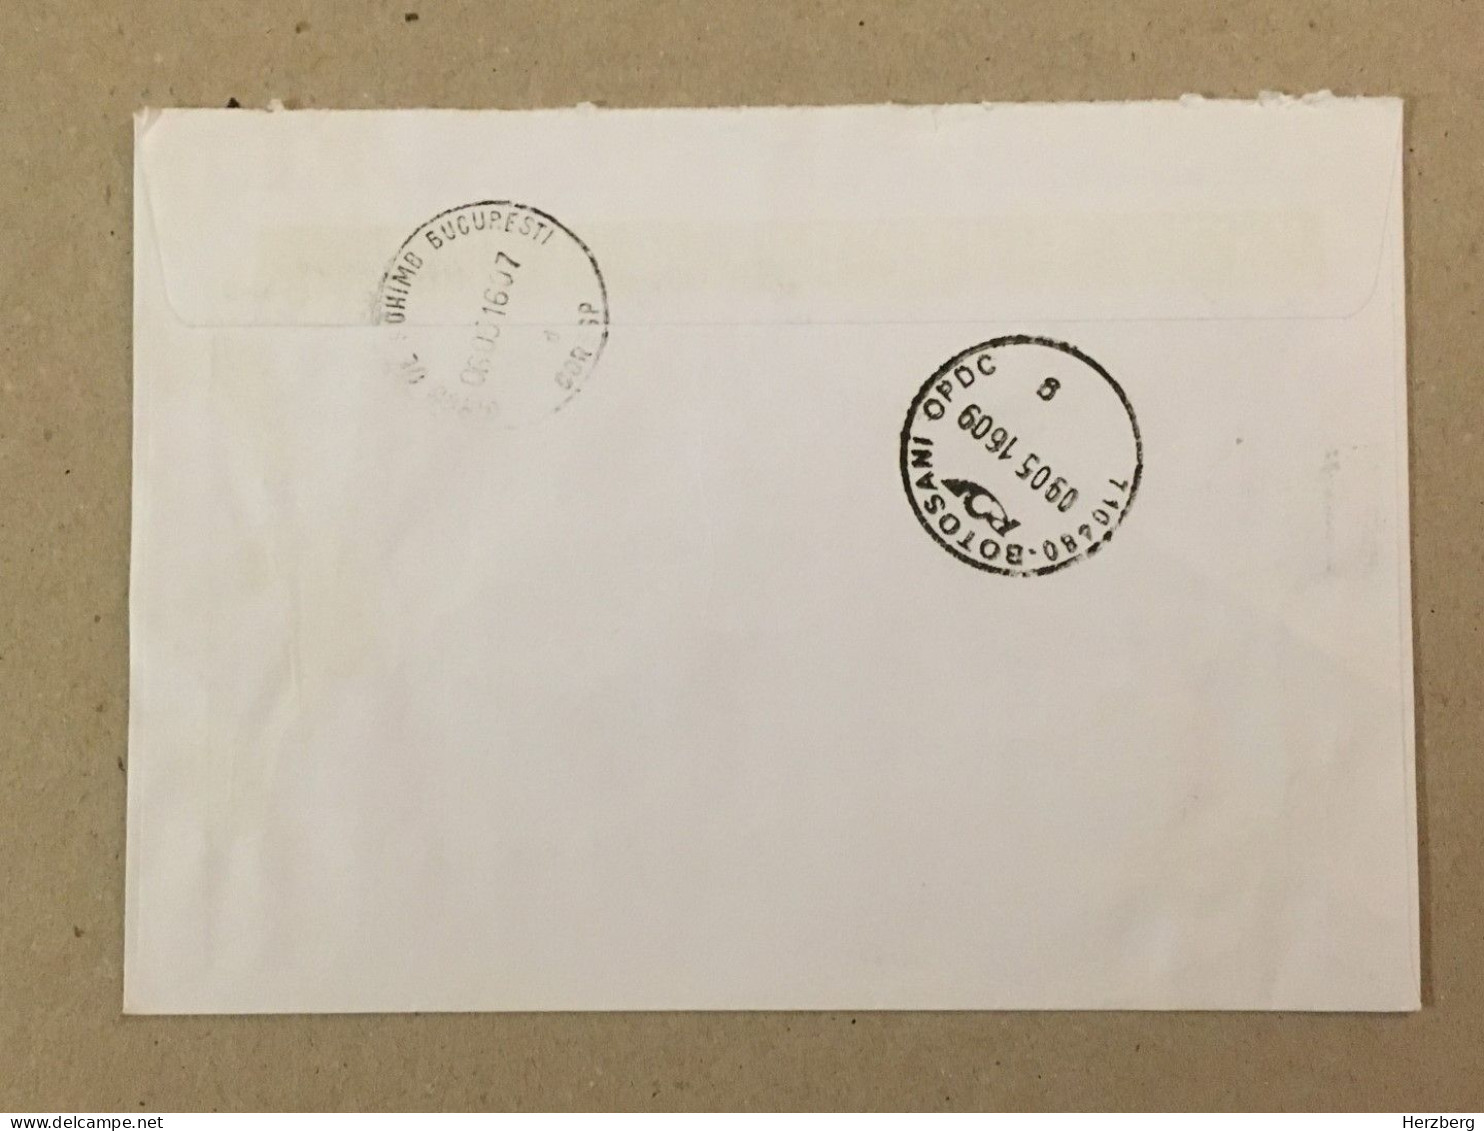 Hungary Magyarorszag Used Letter Stamp Cover Furniture Hawk Eagle Label Printed Sticker Stamp Registered Letter 2016 - Lettres & Documents